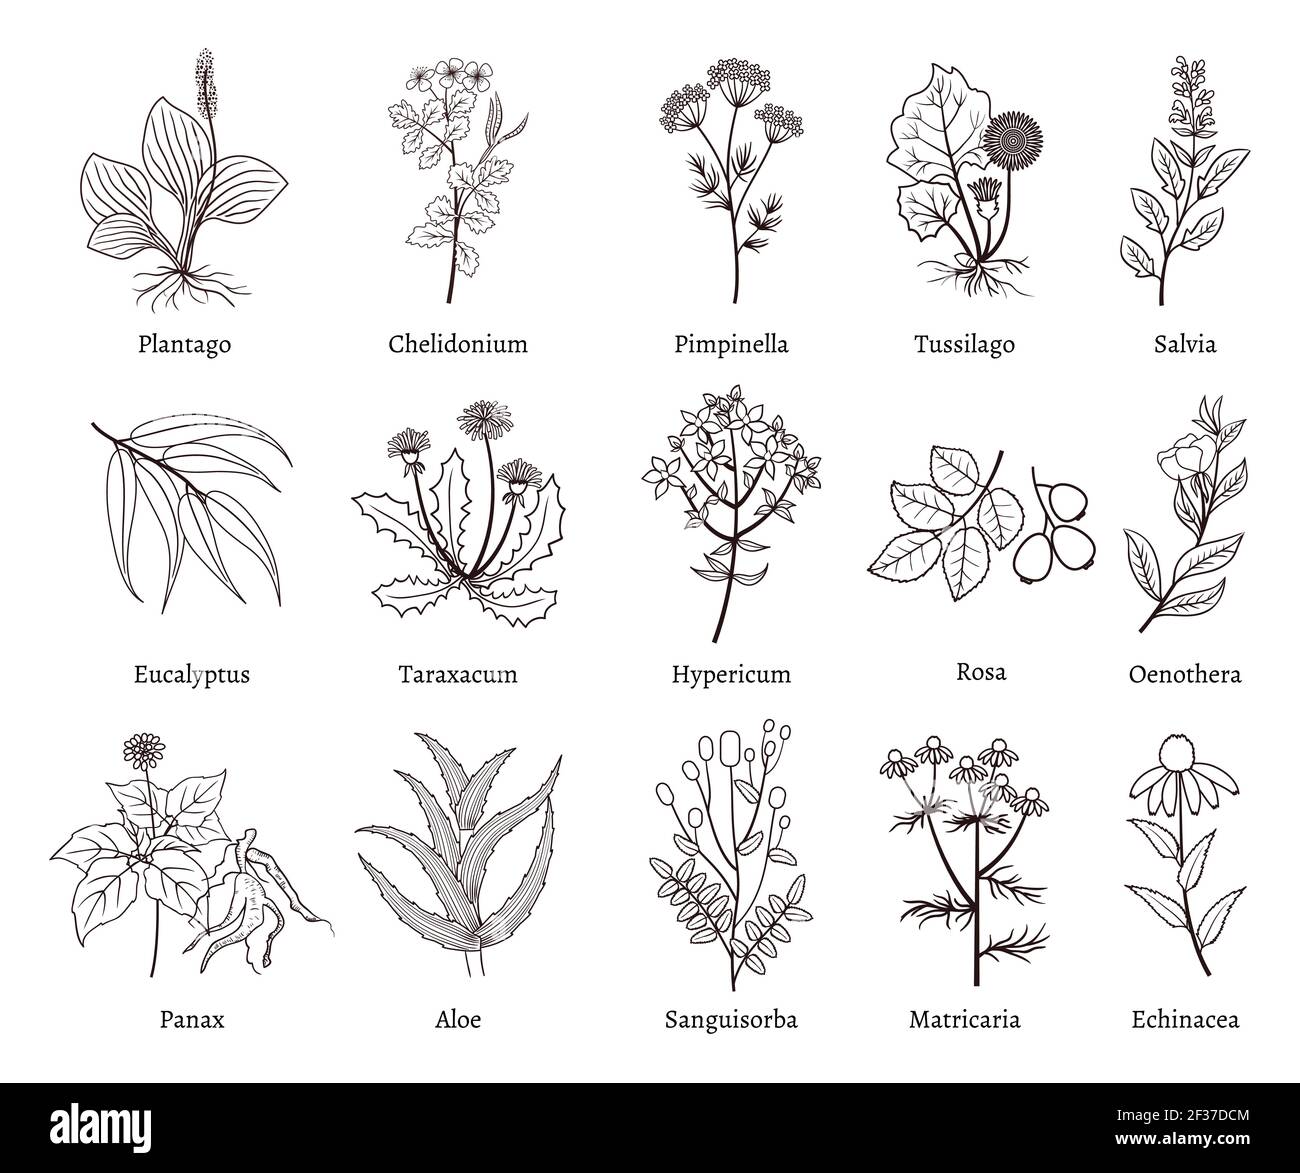 Plant Drawing Images - Free Download on Freepik